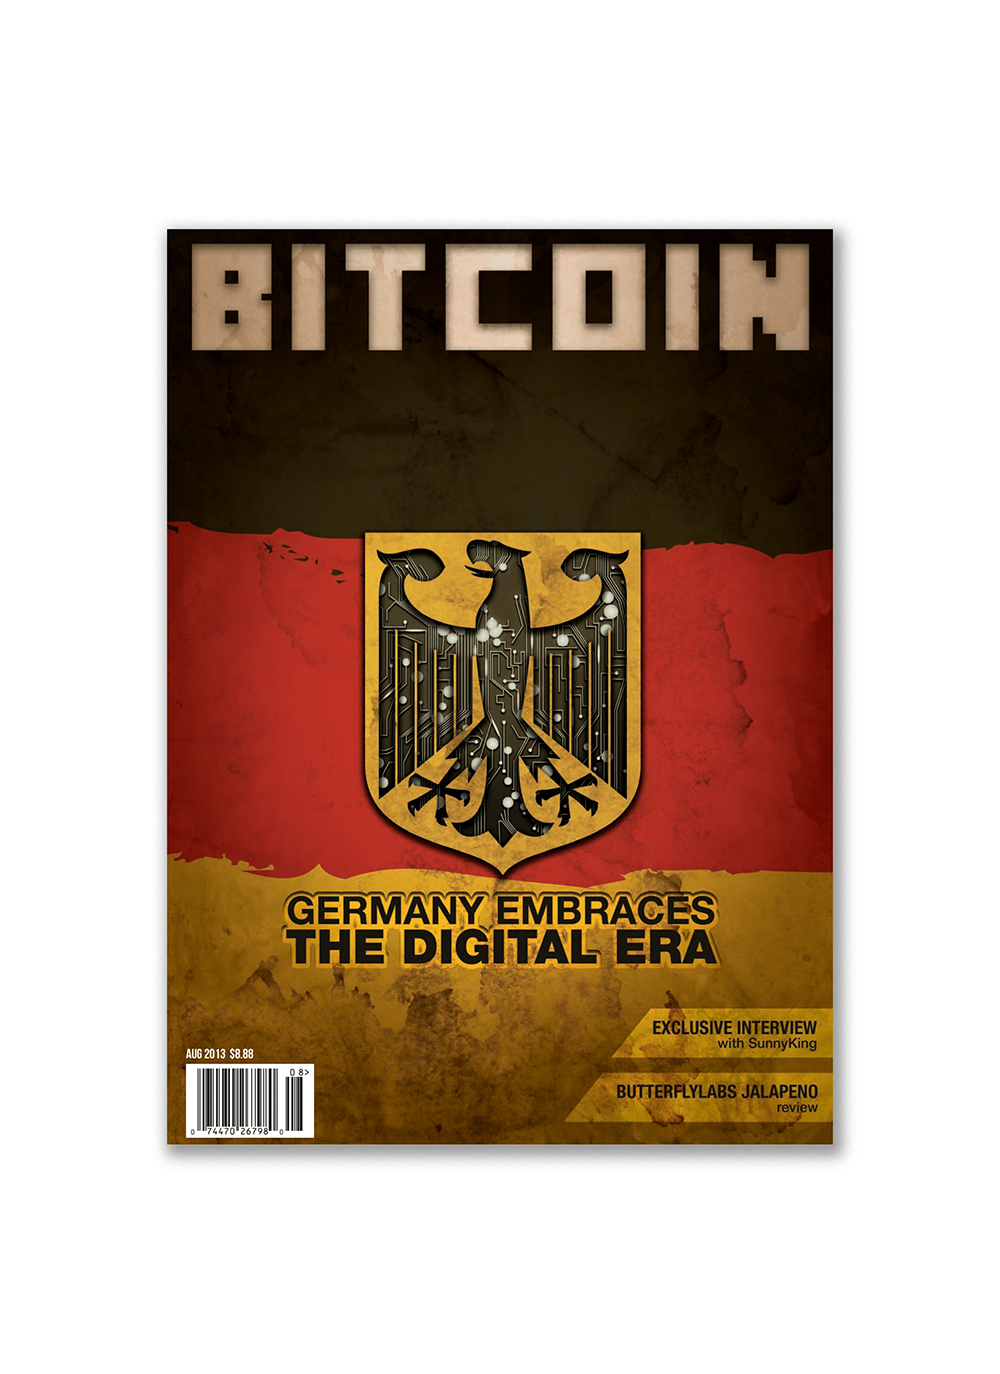 Bitcoin Magazine Issue 13 - BM